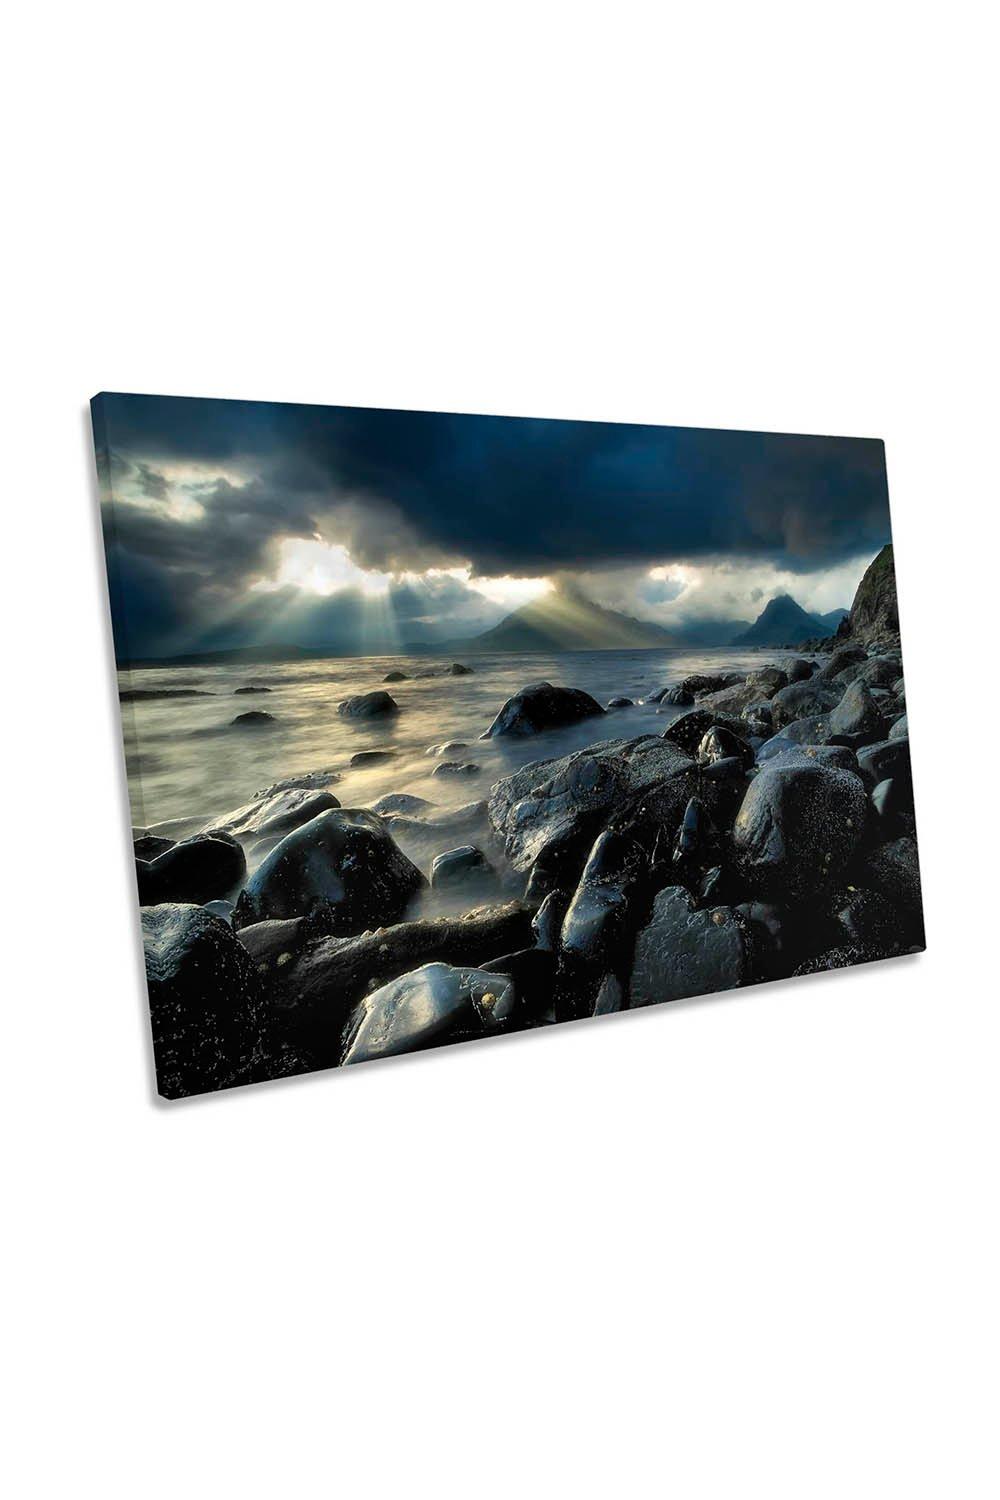 Skye Island Beach Rocks Coast Canvas Wall Art Picture Print